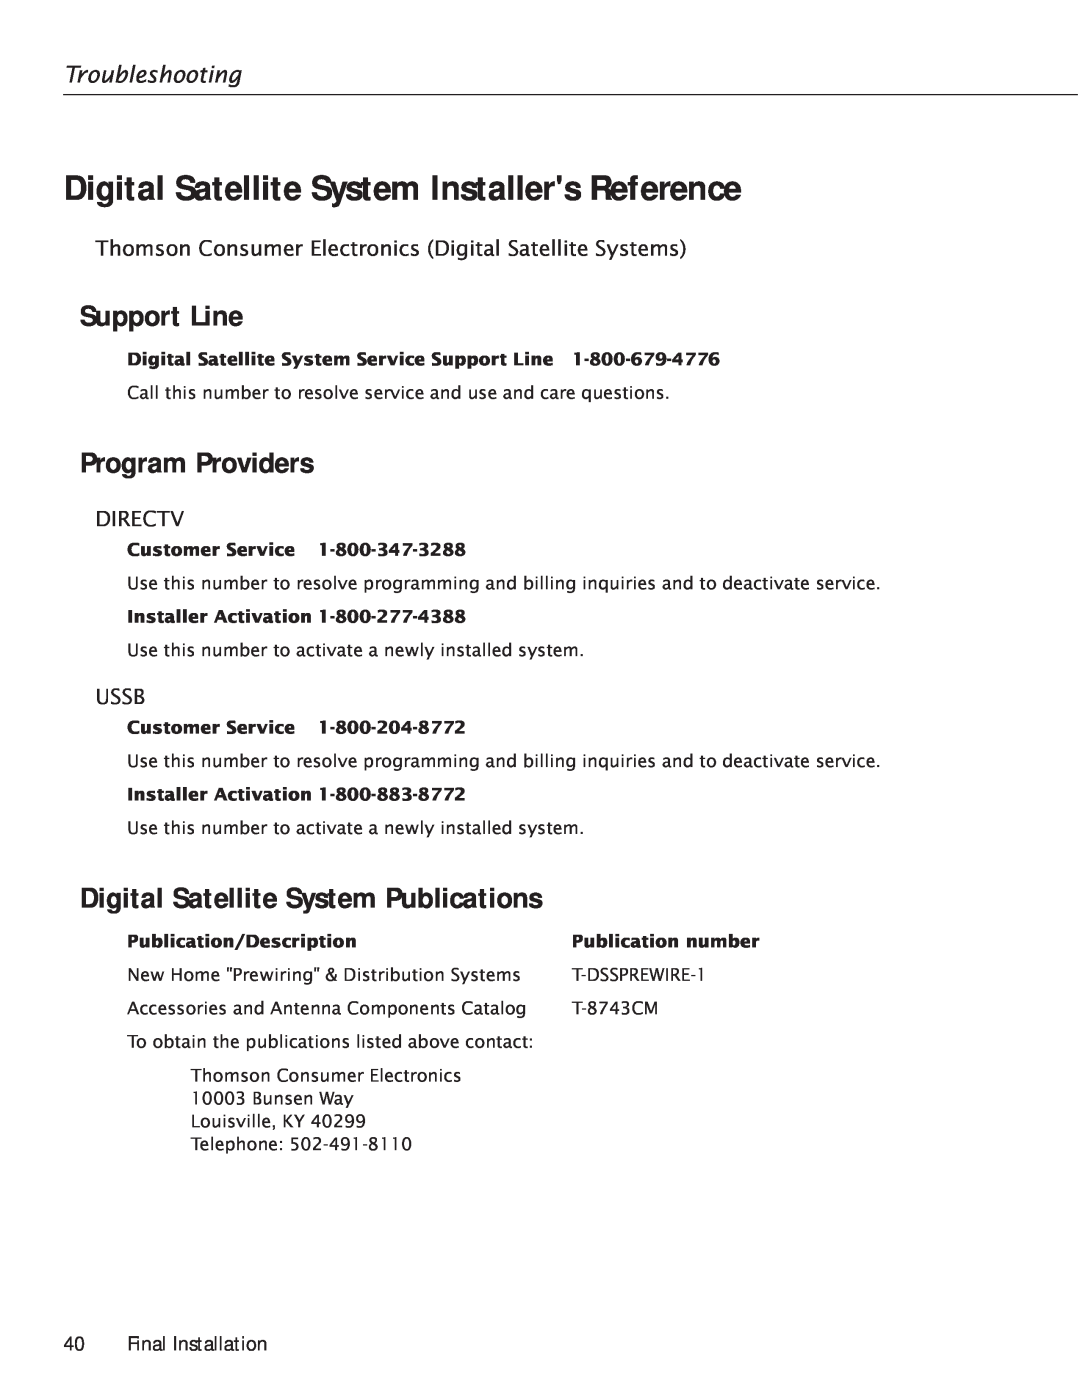 RCA Satellite TV Antenna Digital Satellite System Installers Reference, Support Line, Program Providers, Directv, Ussb 